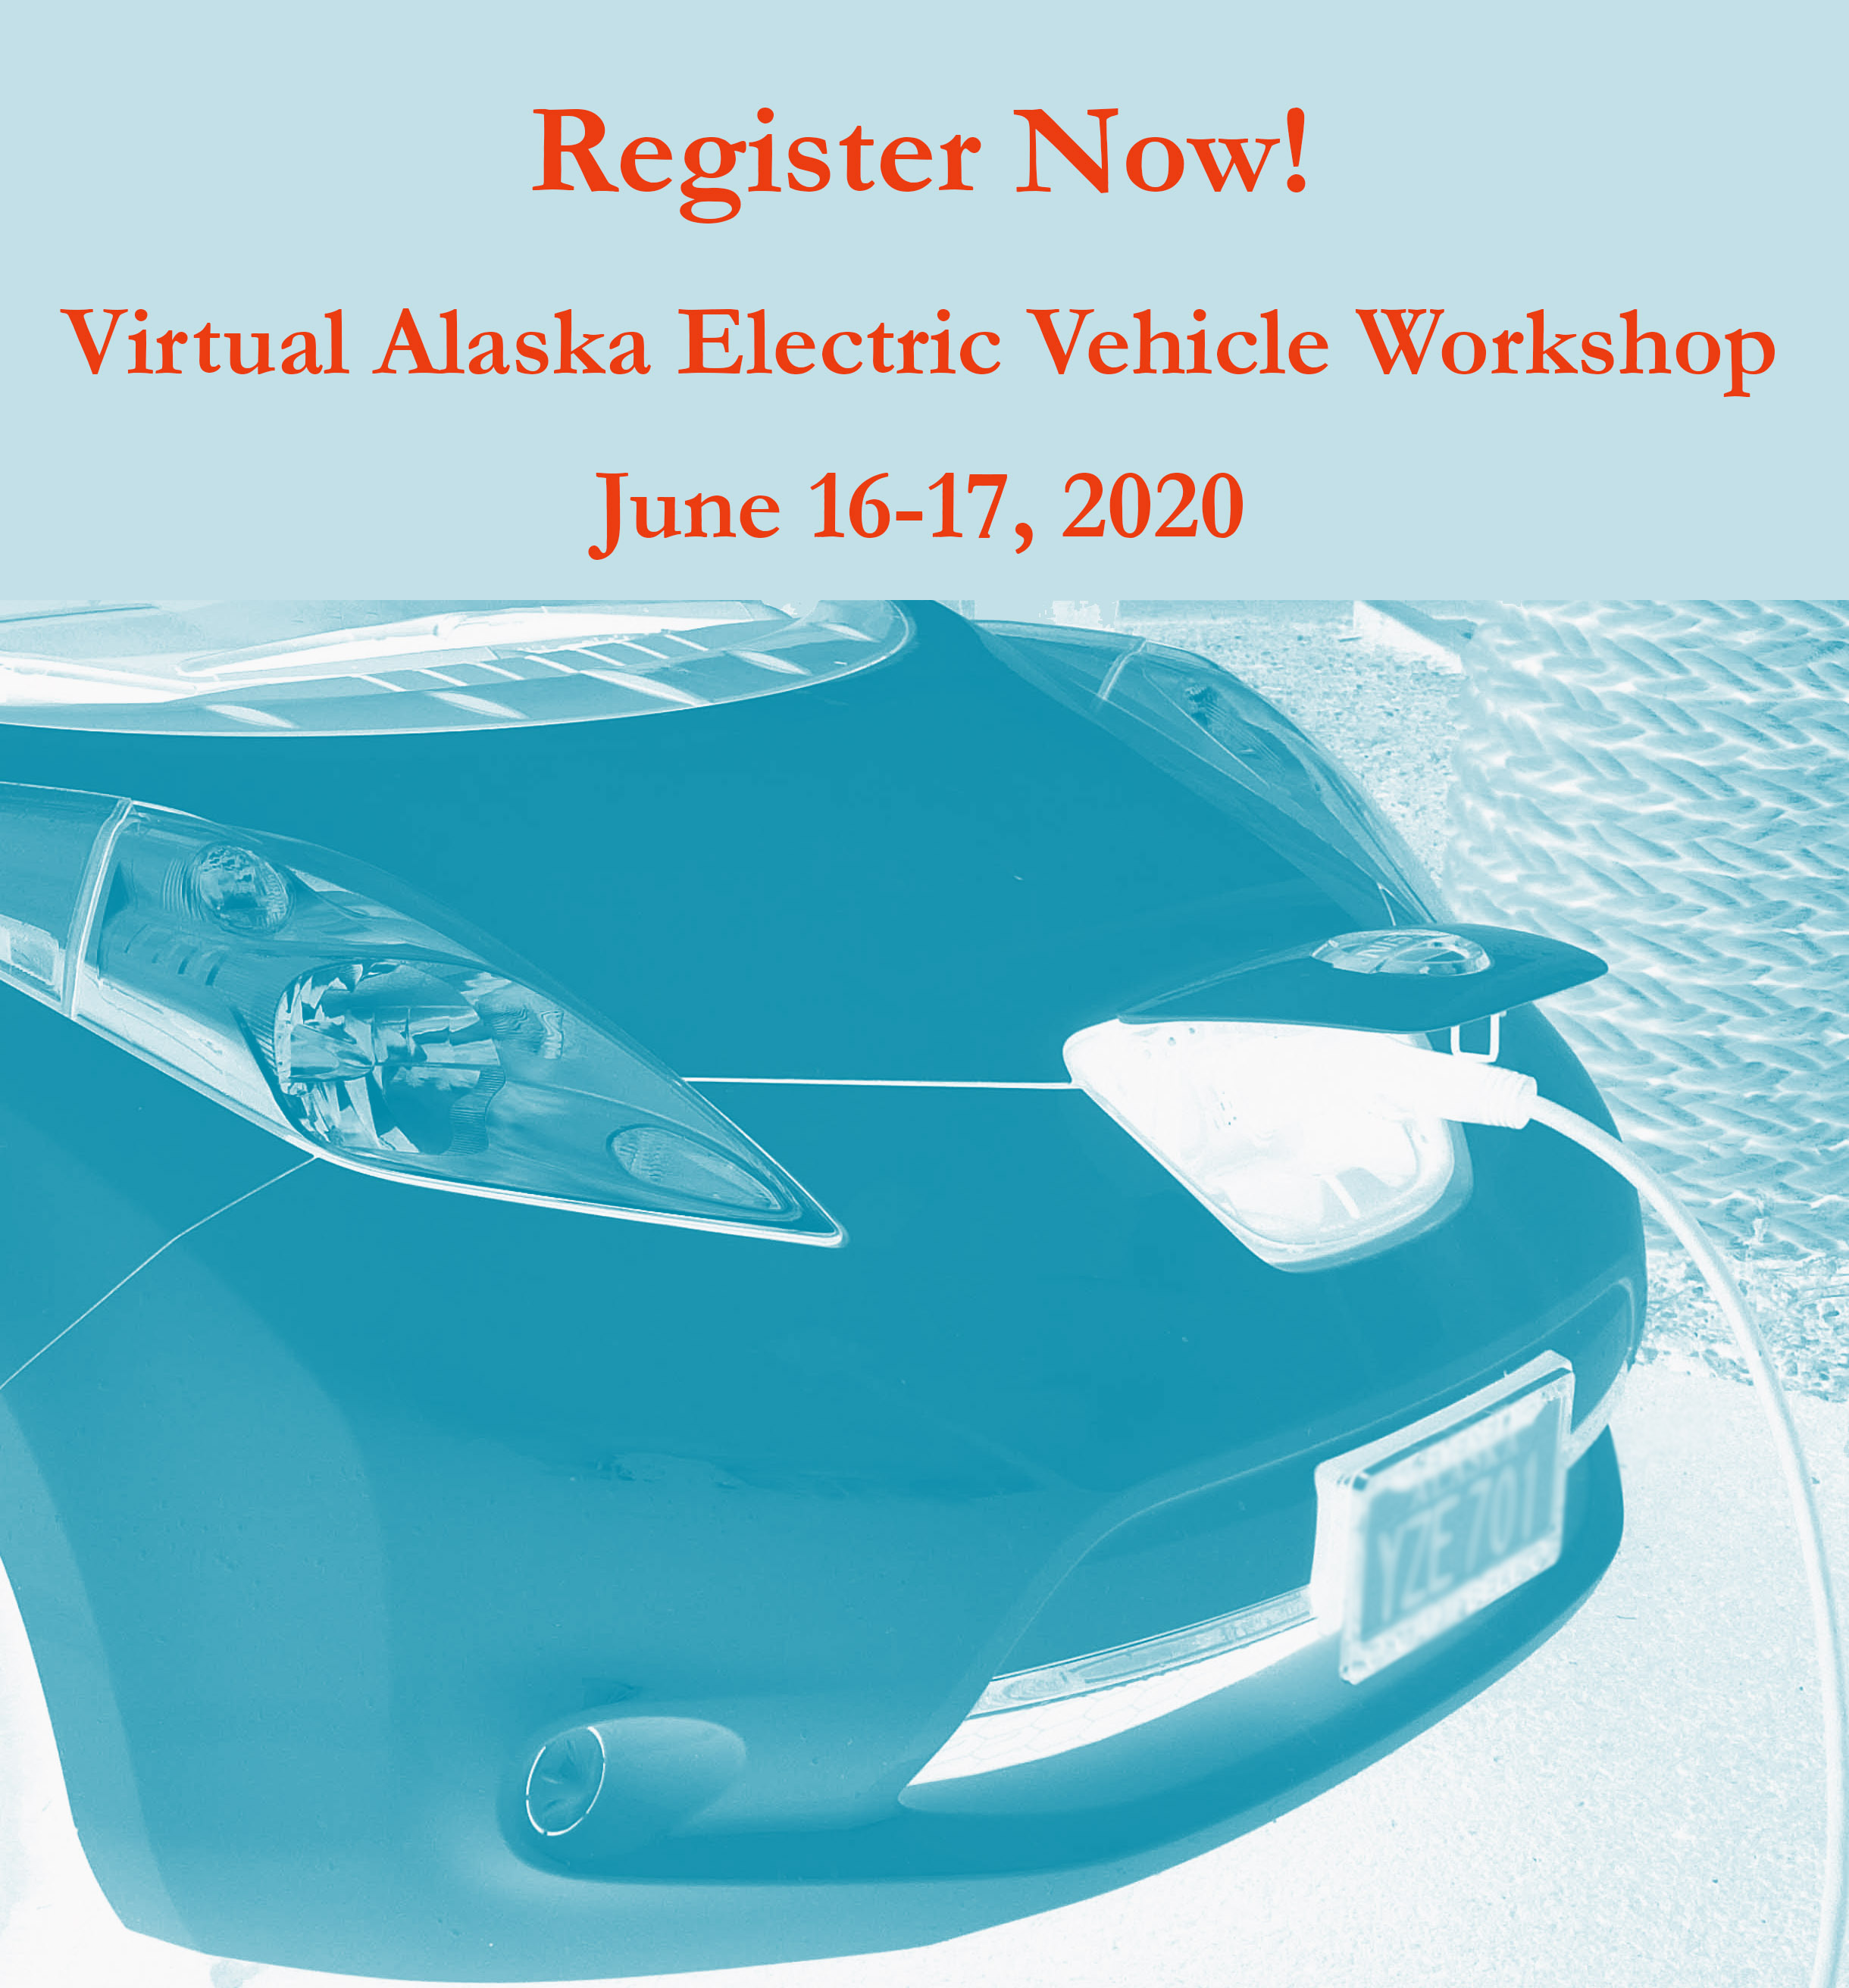 Register Now for Electric Vehicle Workshop